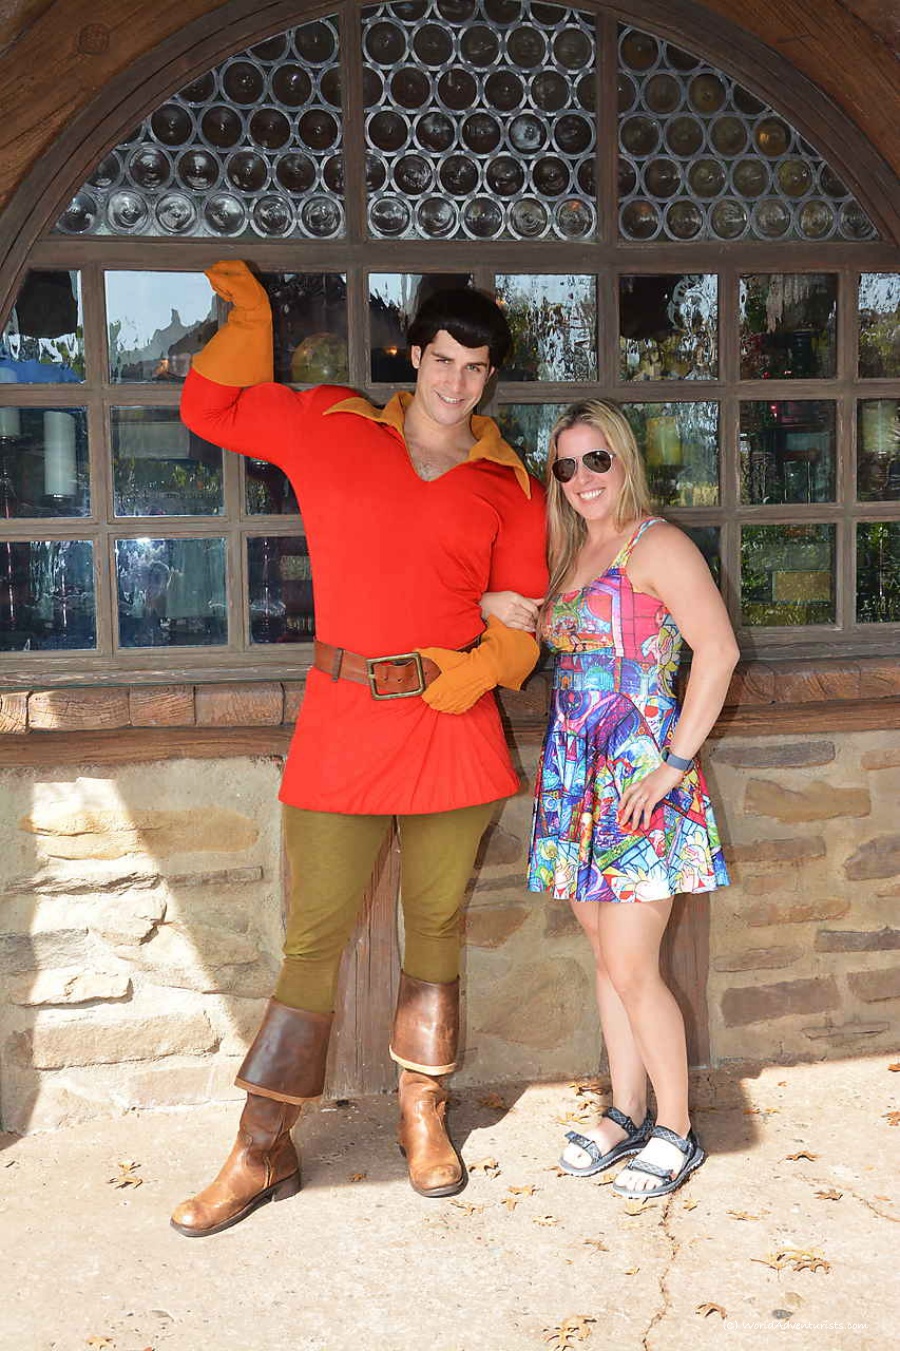 Gaston at the Magic Kingdom